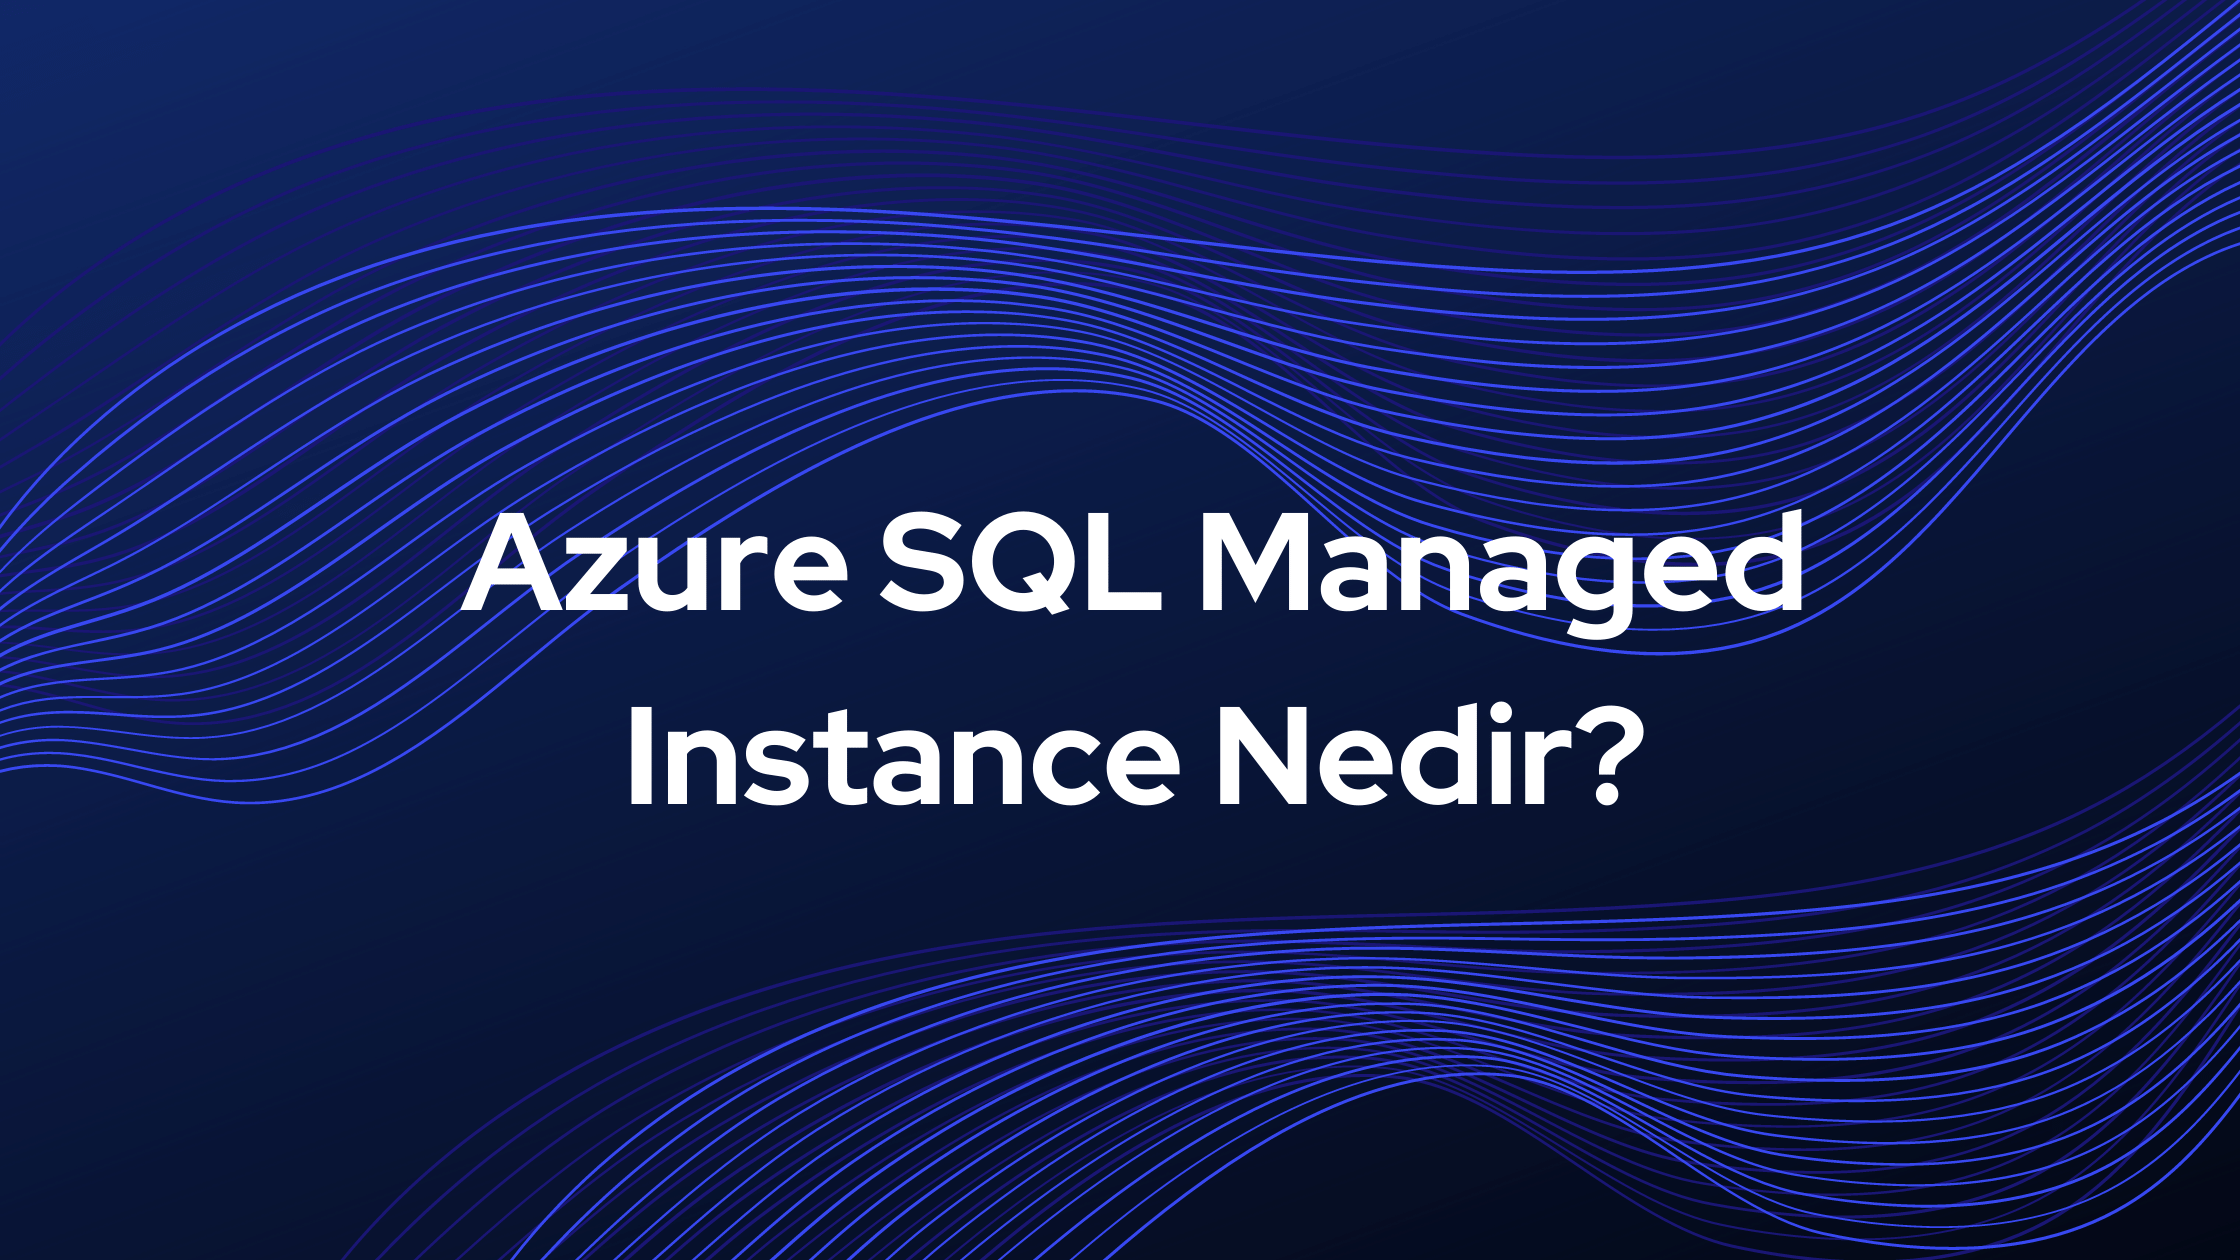 Azure SQL Managed Instance Nedir